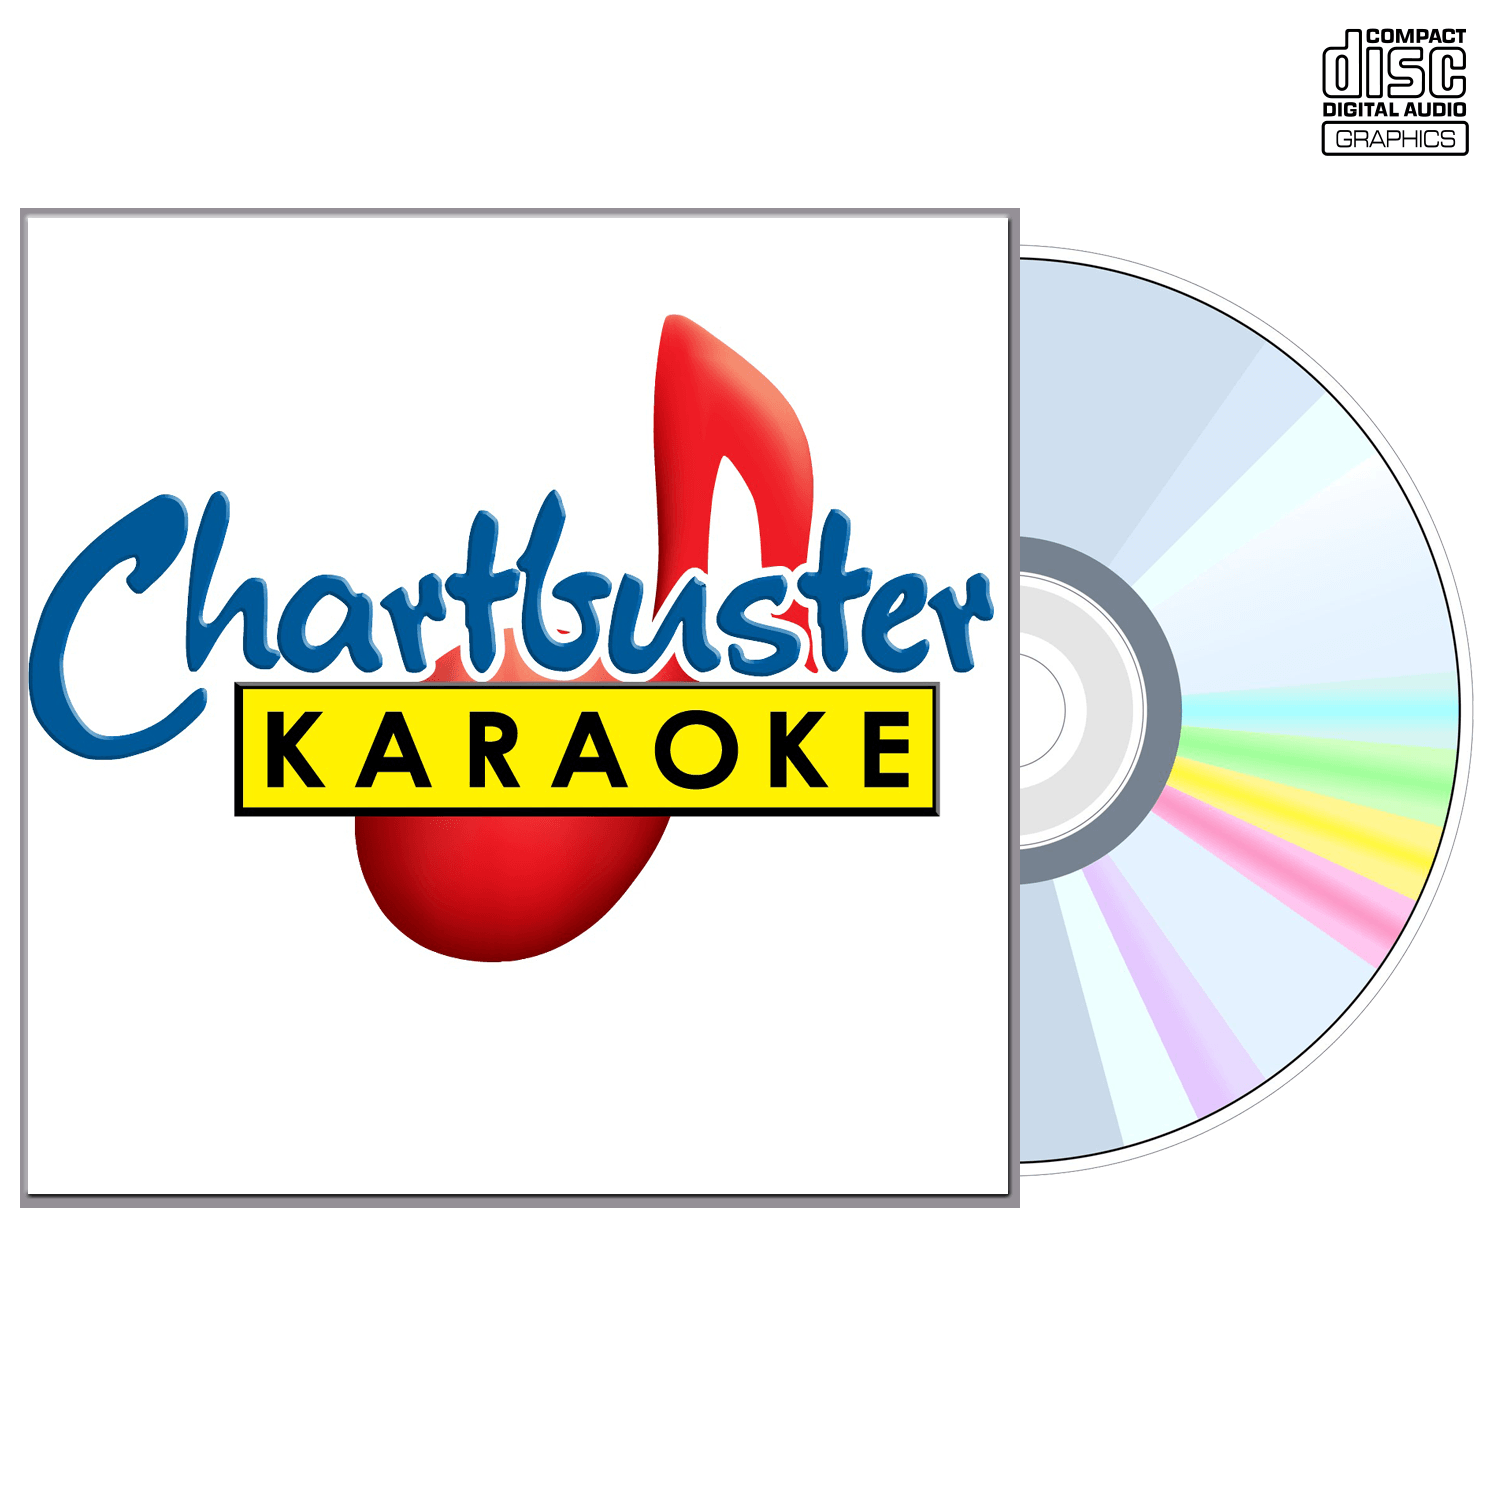 70's Collection Vol 12 - CD+G - Chartbuster Karaoke - Karaoke Home Entertainment